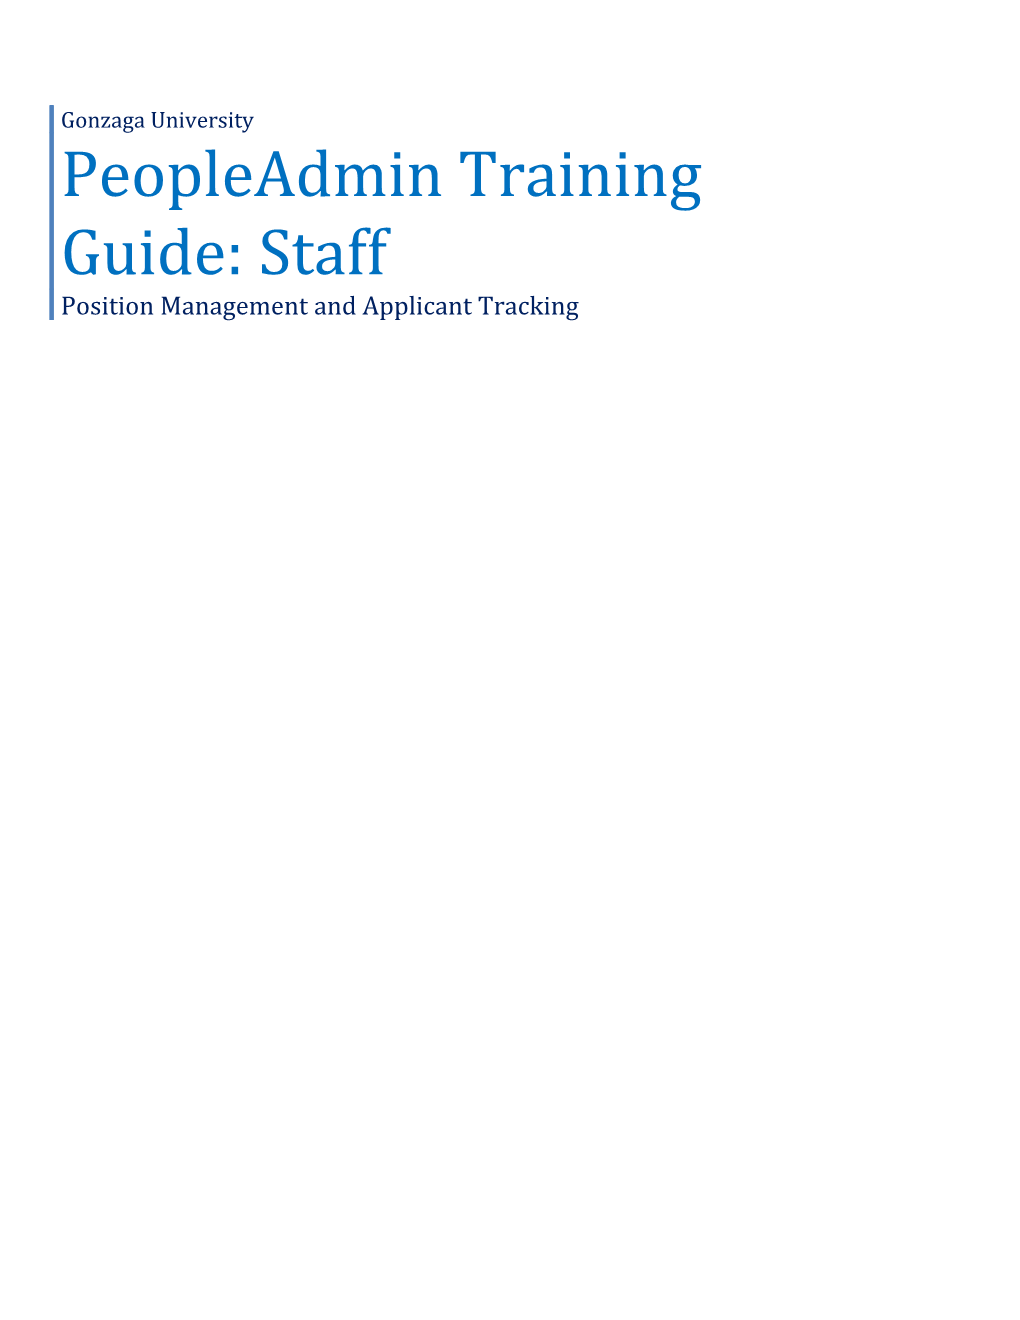 Peopleadmin Training Guide: Staff